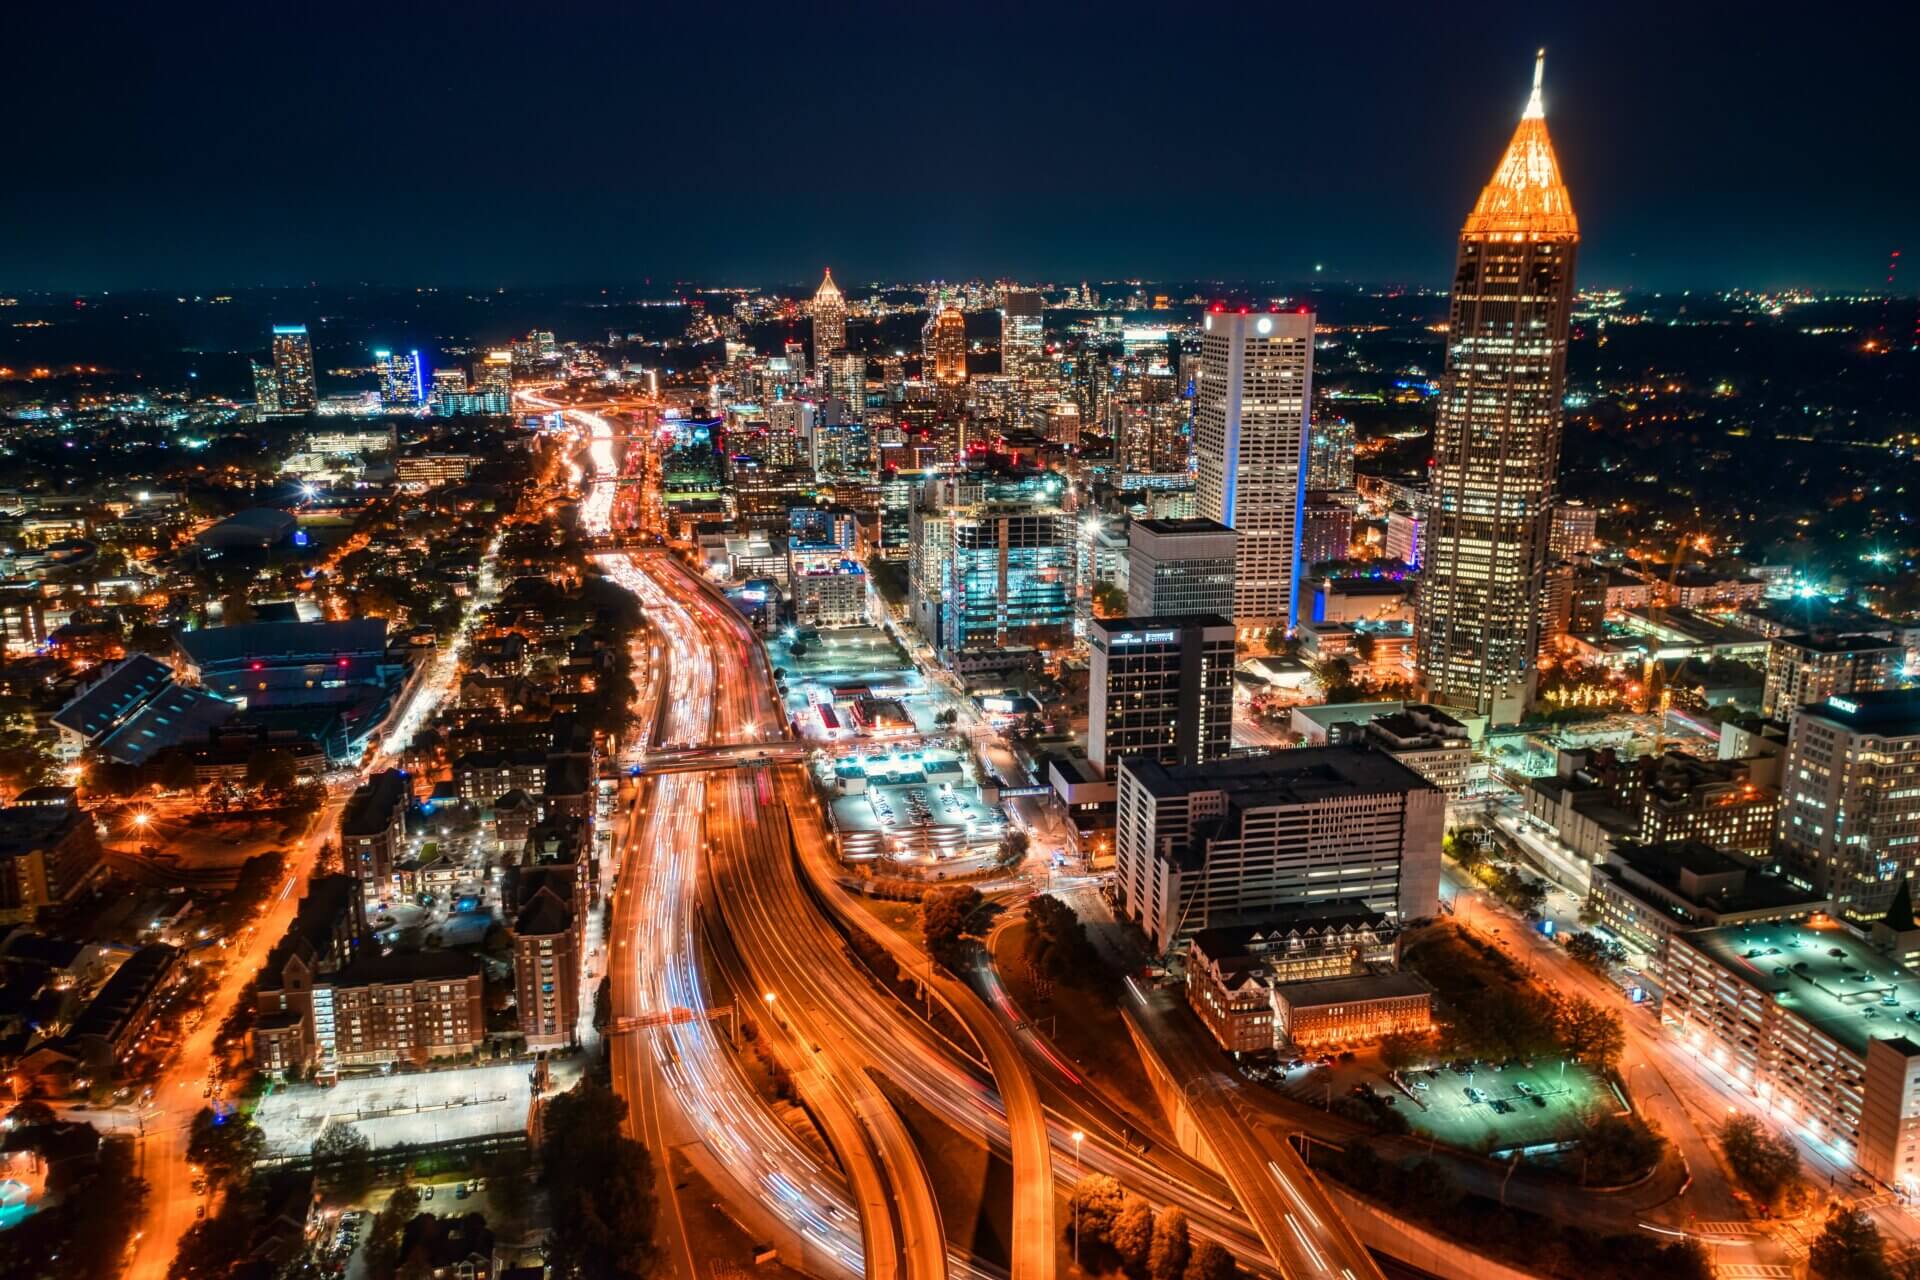 Atlanta: the Southeast’s Silicon Valley